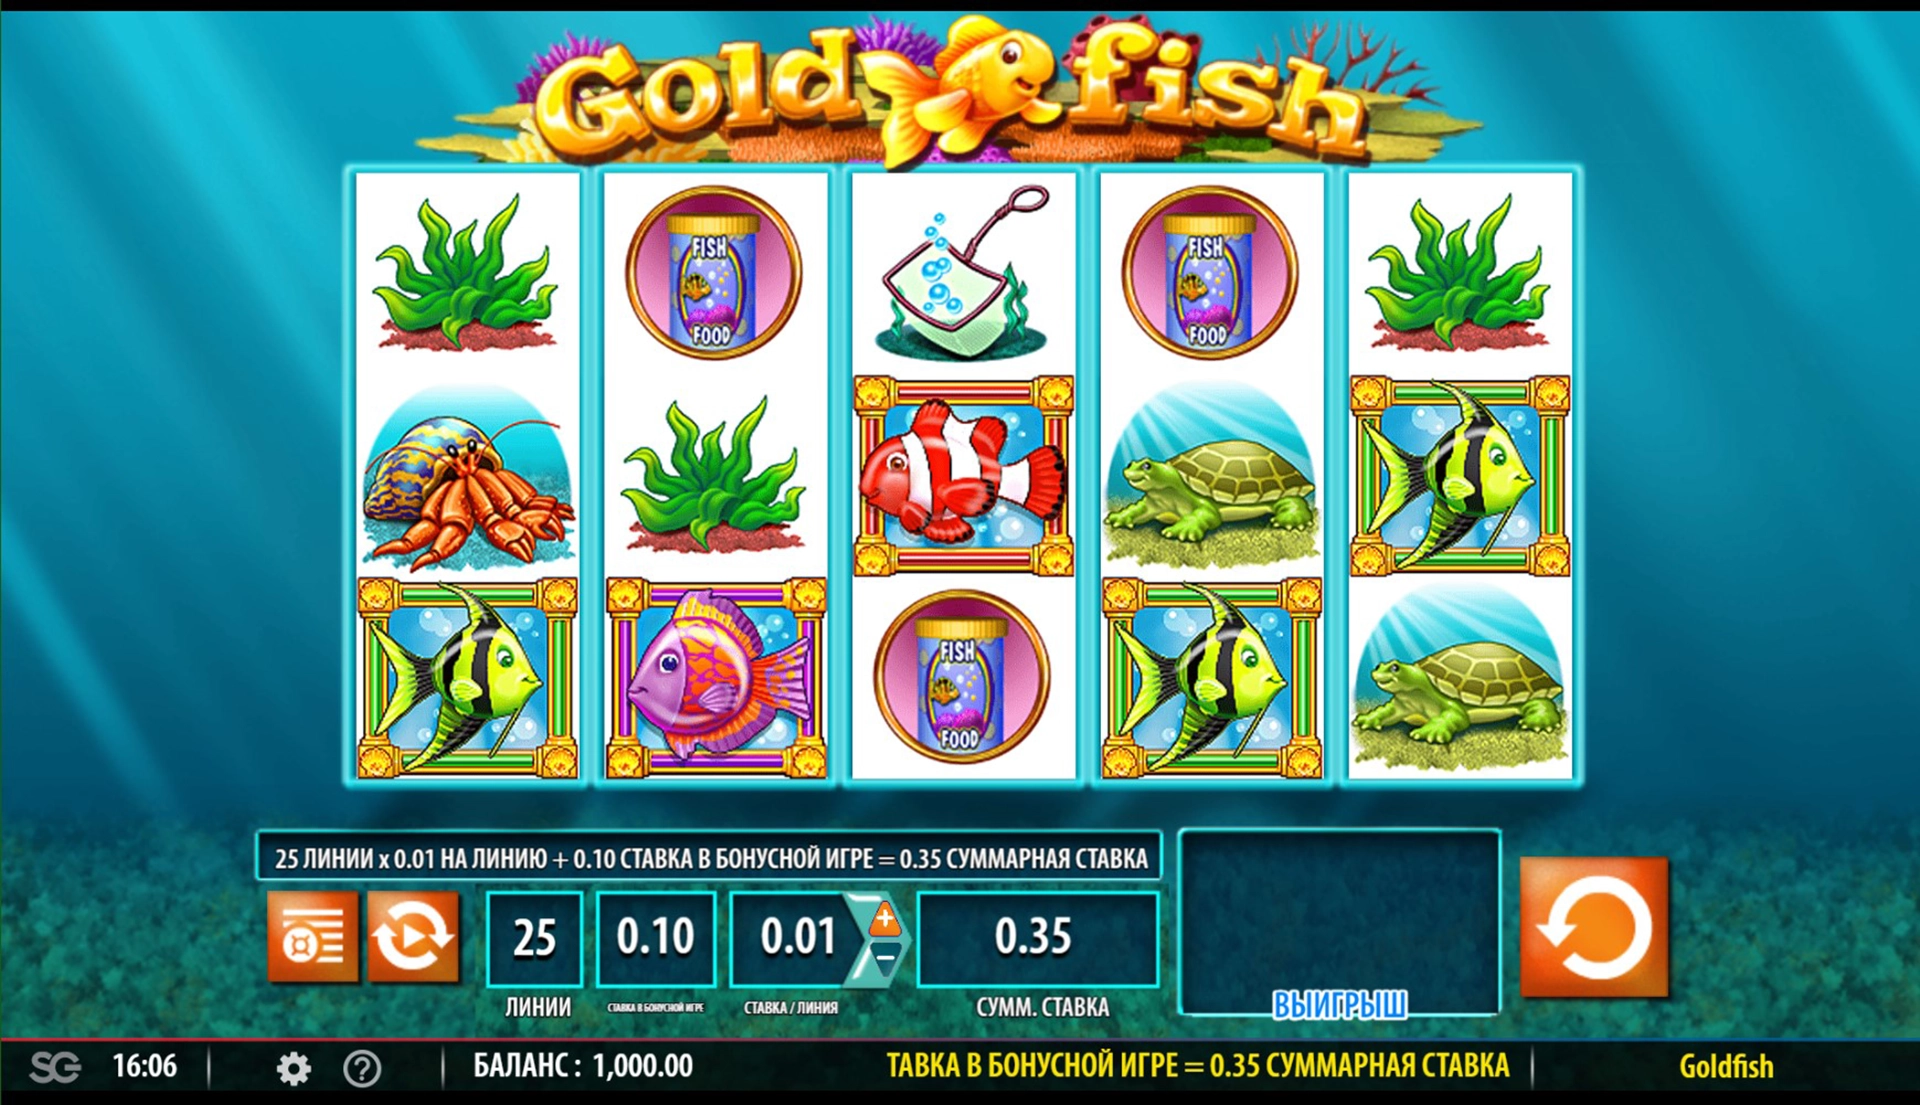 Screenshot of the Goldfish Slot